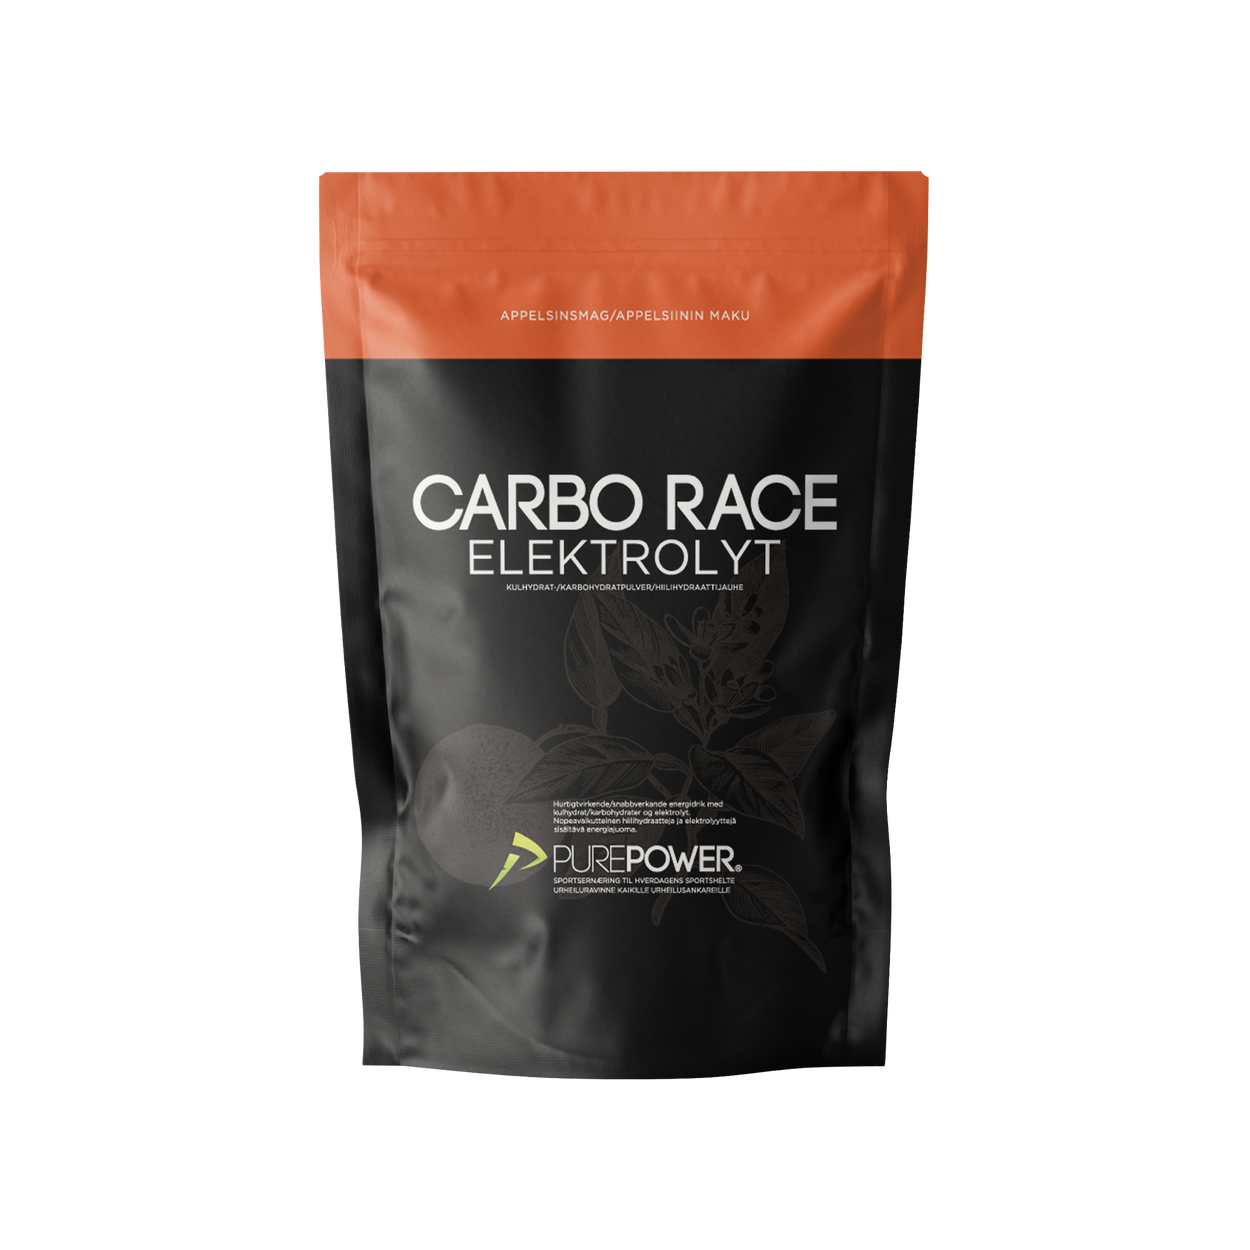 Carbo Race Elektrolyter Apelsin 1 kg